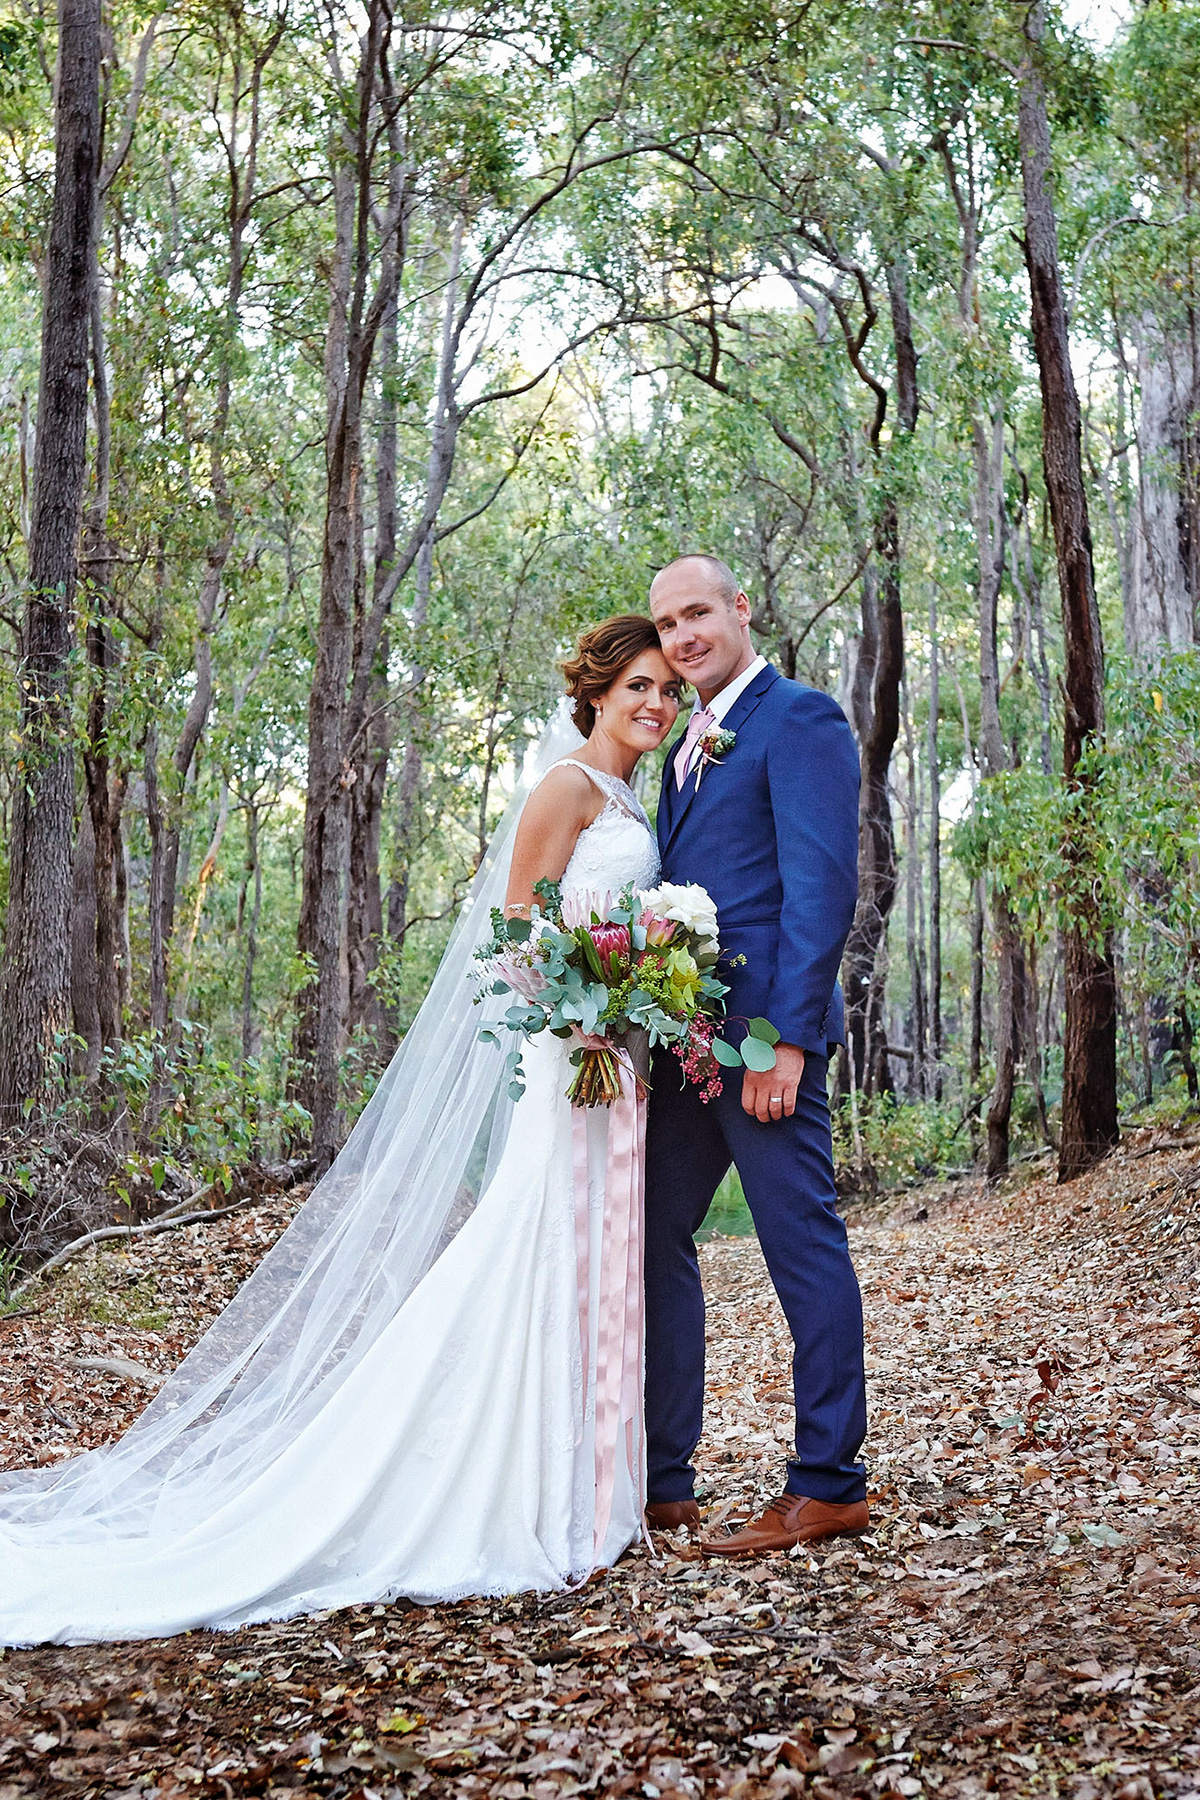 Adelaide_Ben_Rustic-Vineyard-Wedding_Peter-Edwards-Photography_SBS_016